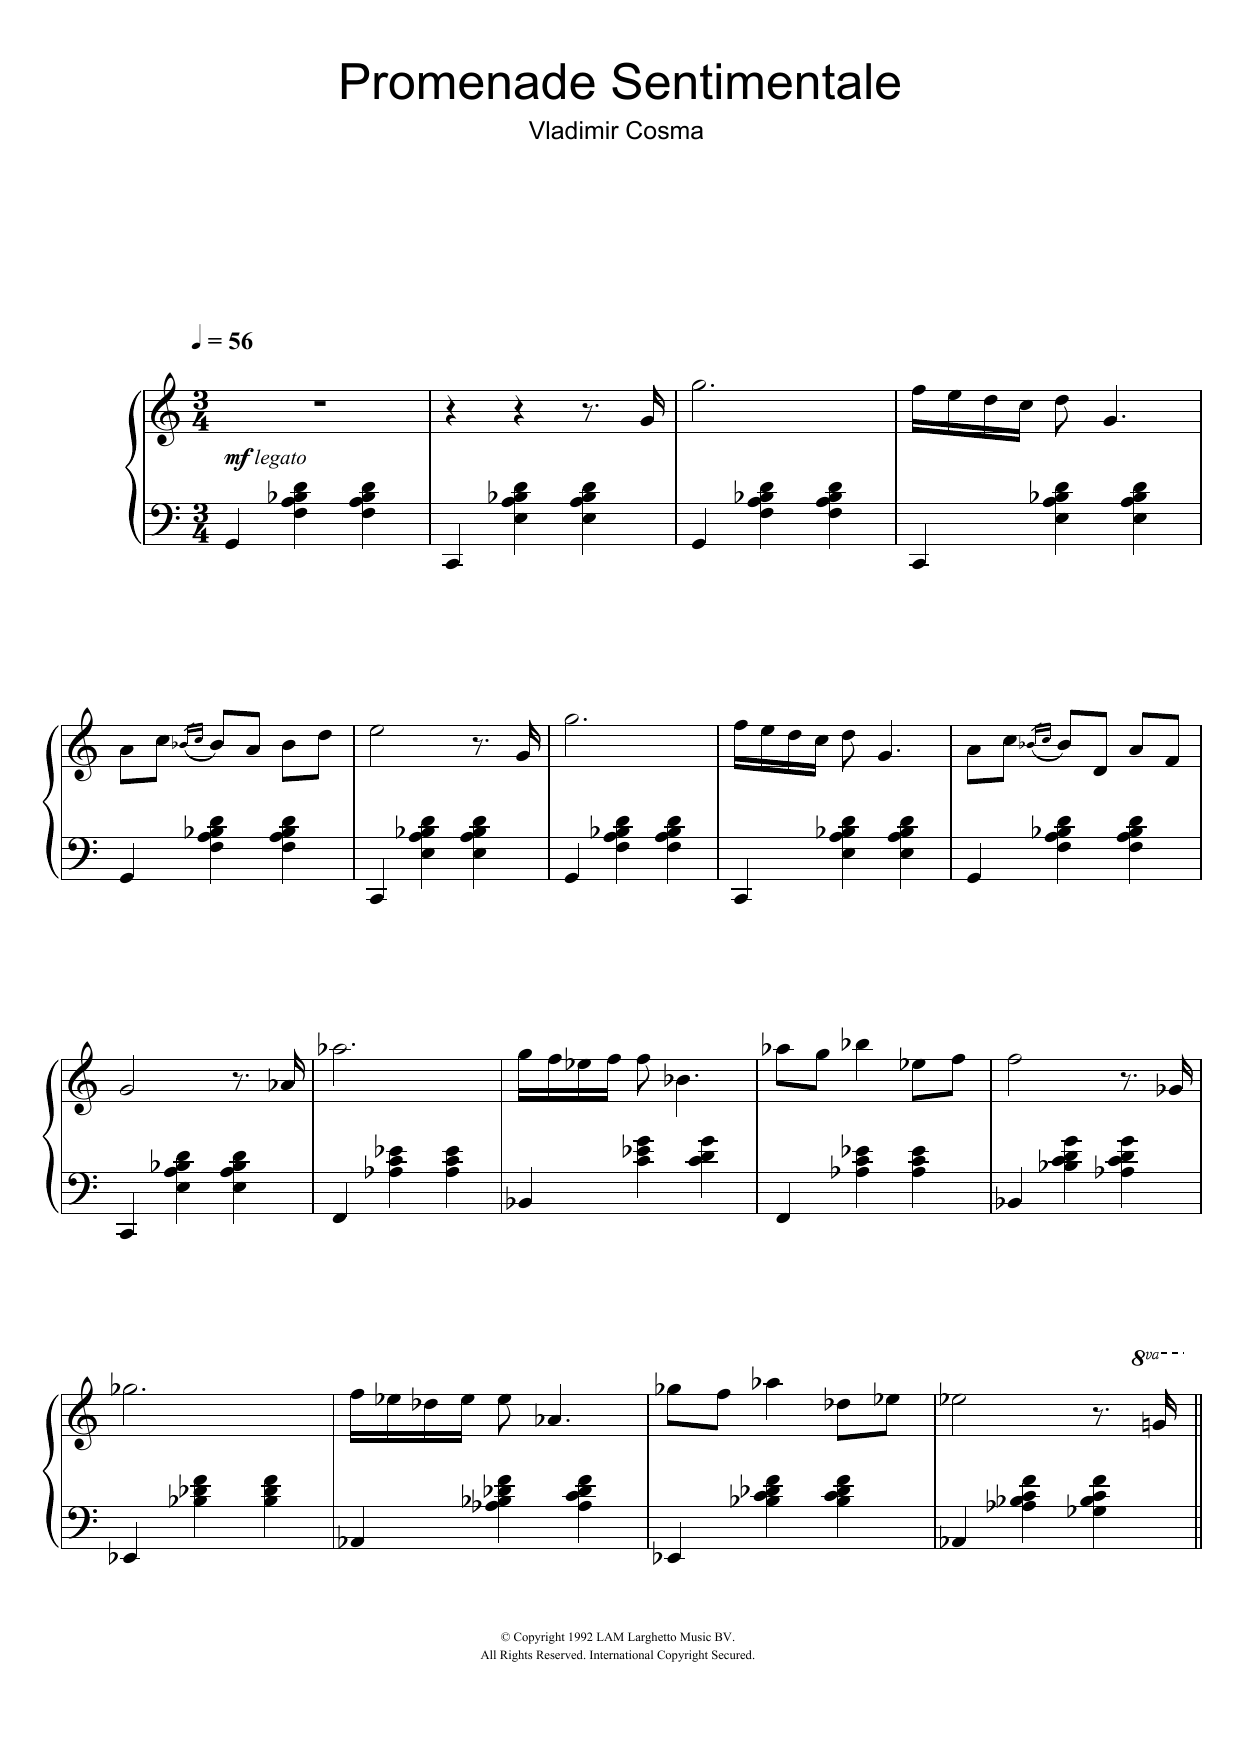 Vladimir Cosma Promenade Sentimentale Sheet Music Notes & Chords for Piano - Download or Print PDF